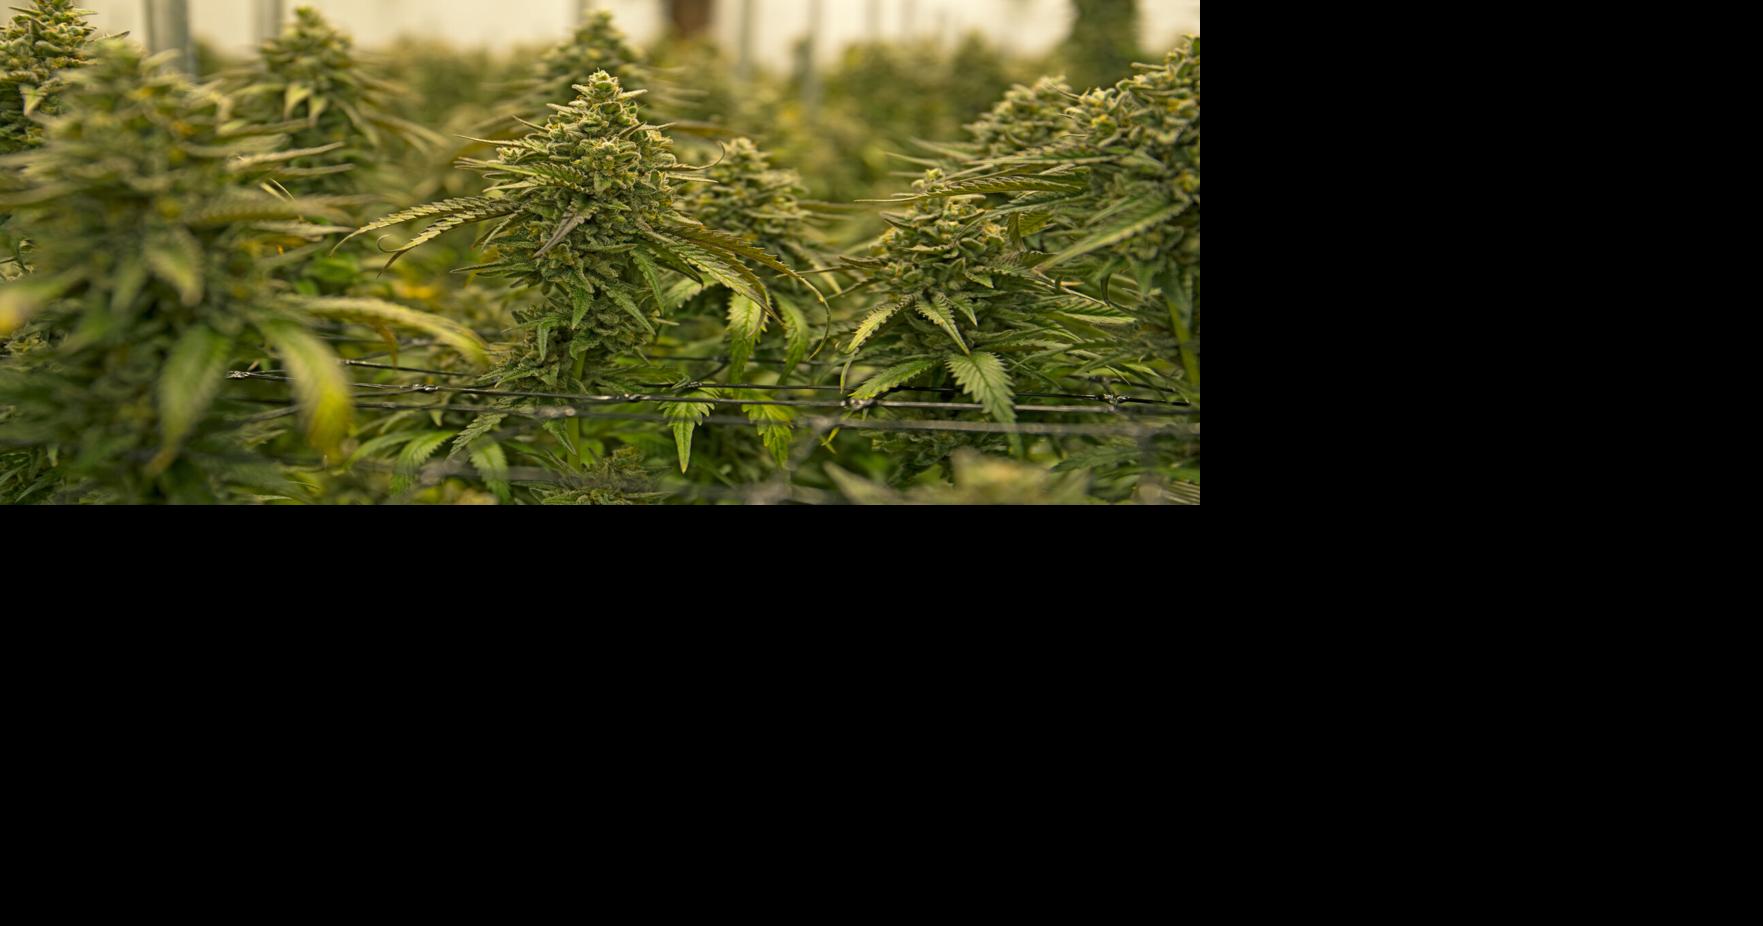 Rhode Island House, Senate to vote on marijuana legalization this week